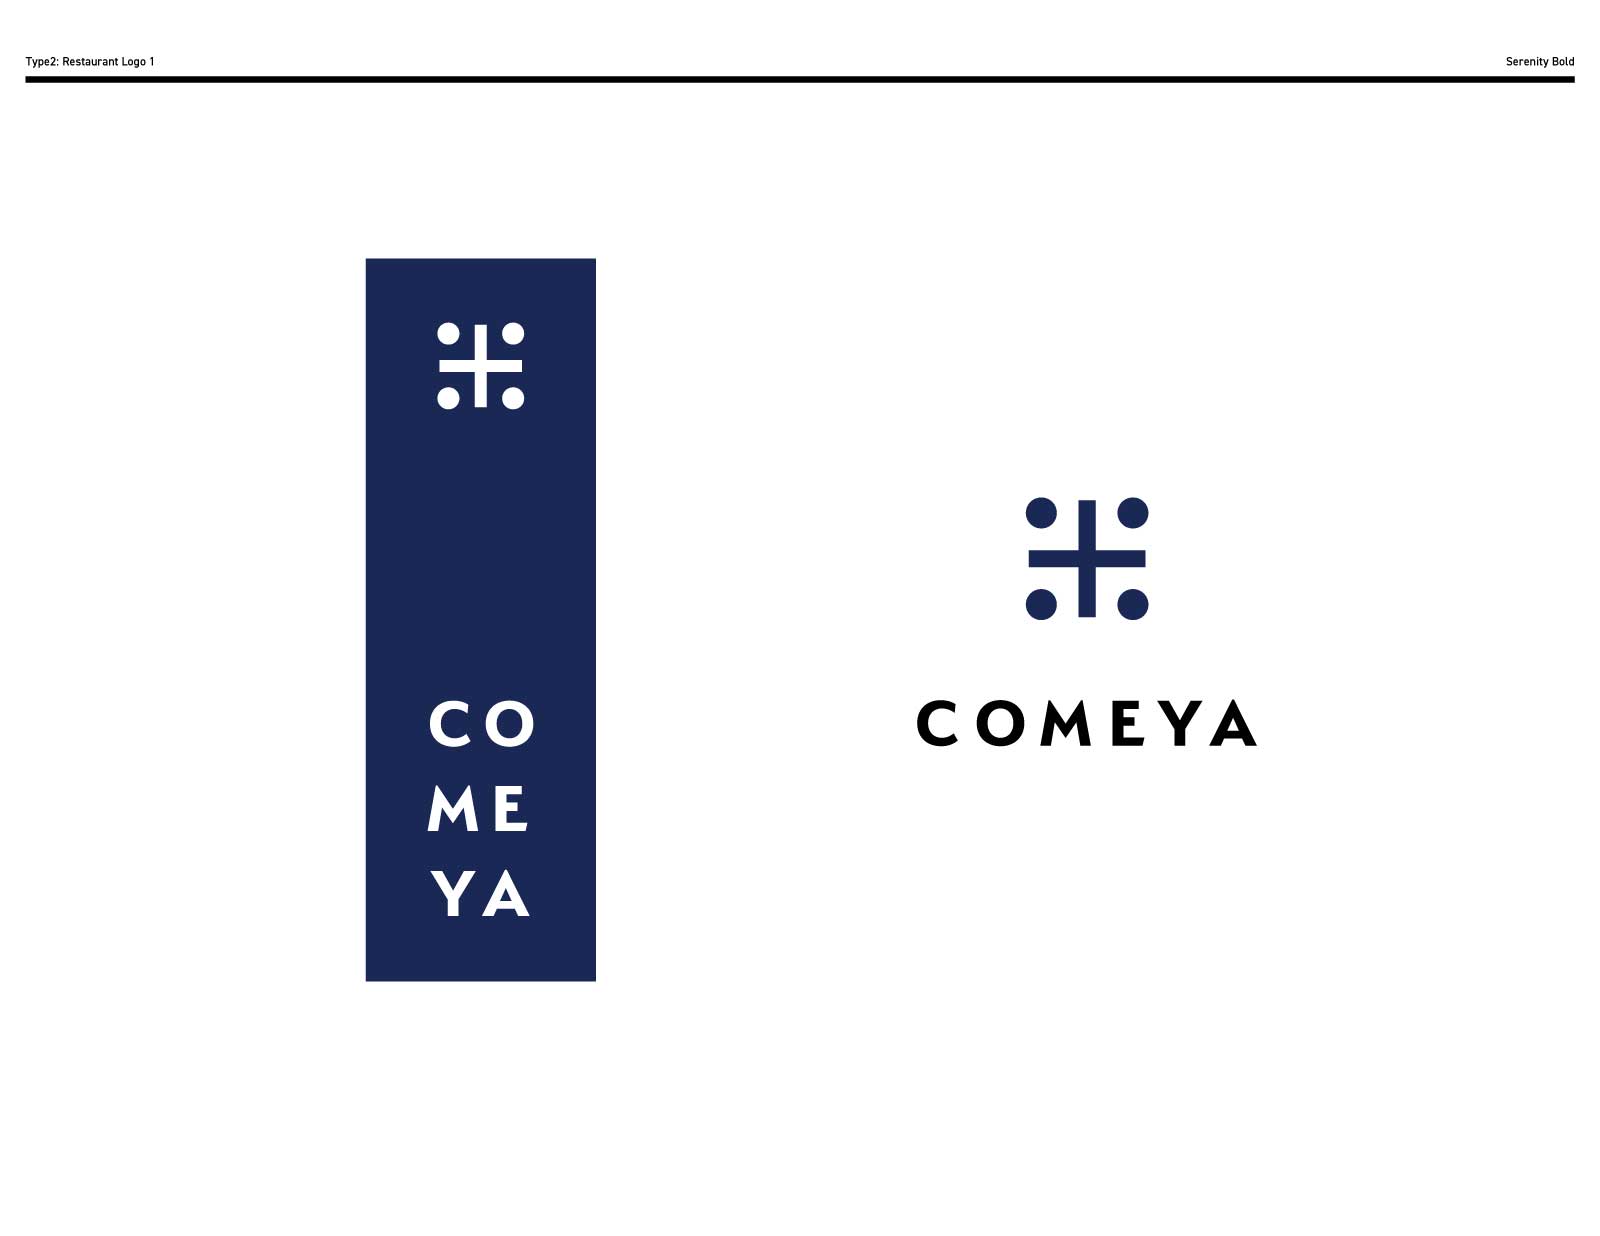 Restaurant Branding: Comeya Logo Ideas